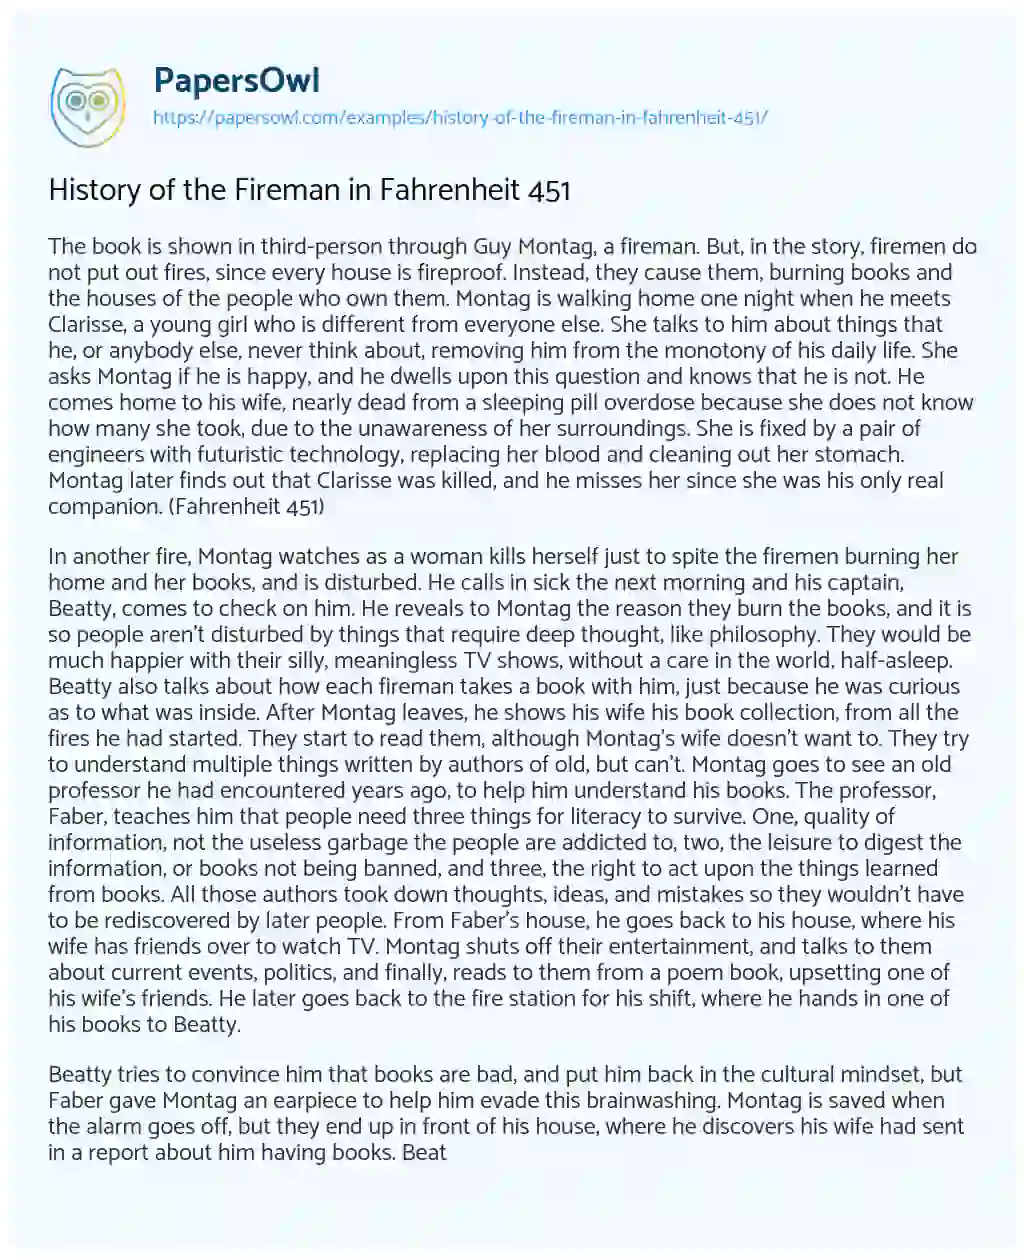 Essay on History of the Fireman in Fahrenheit 451